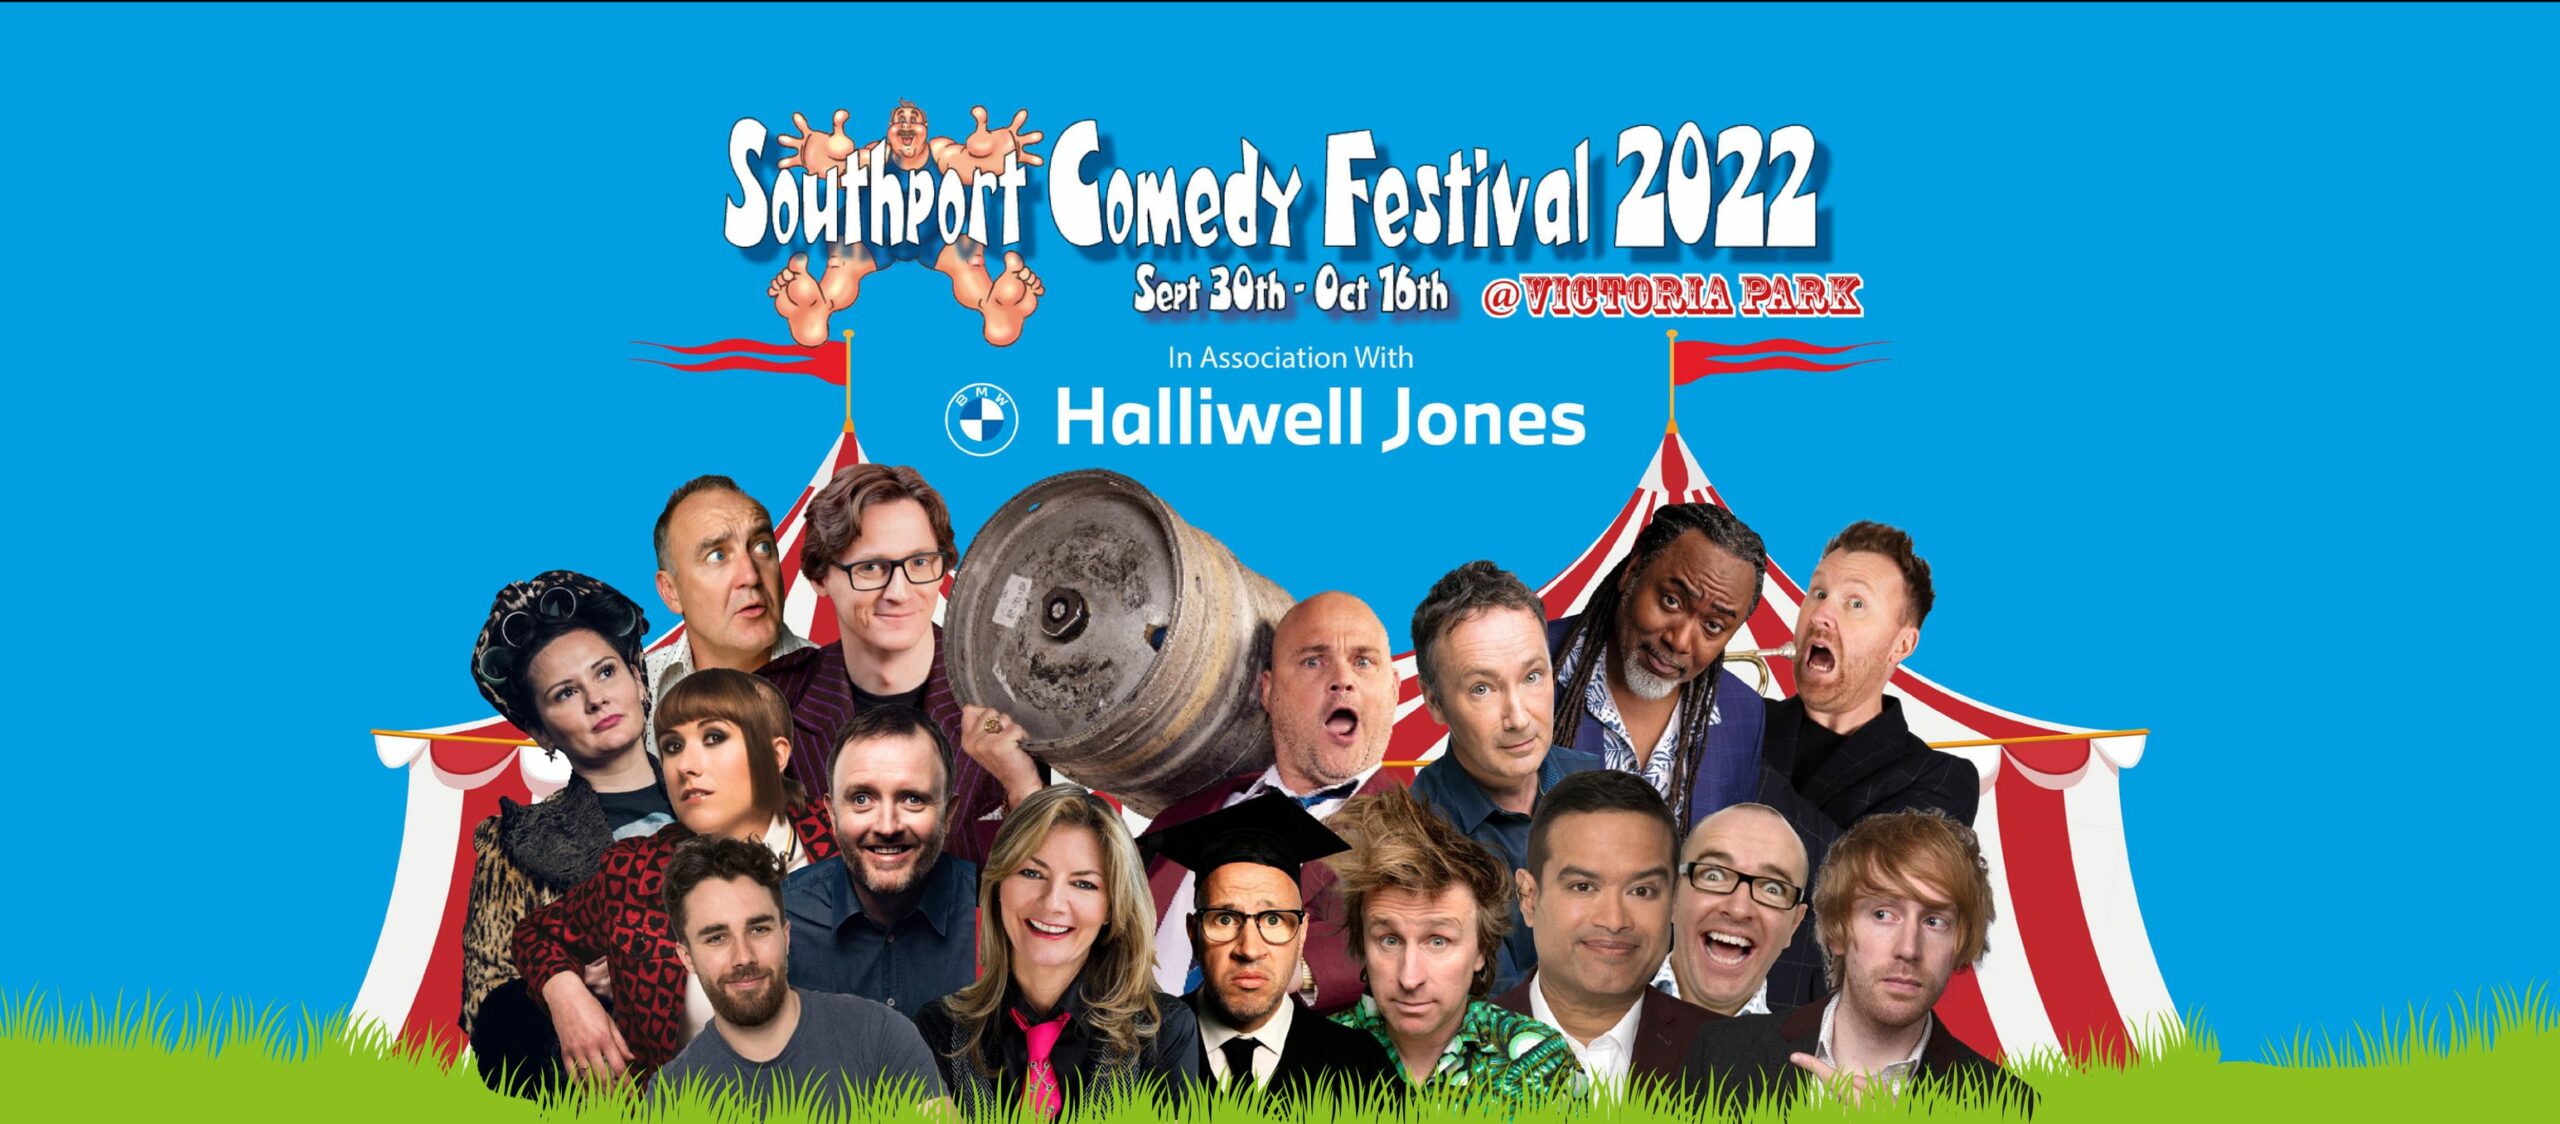 Southport Comedy Festival